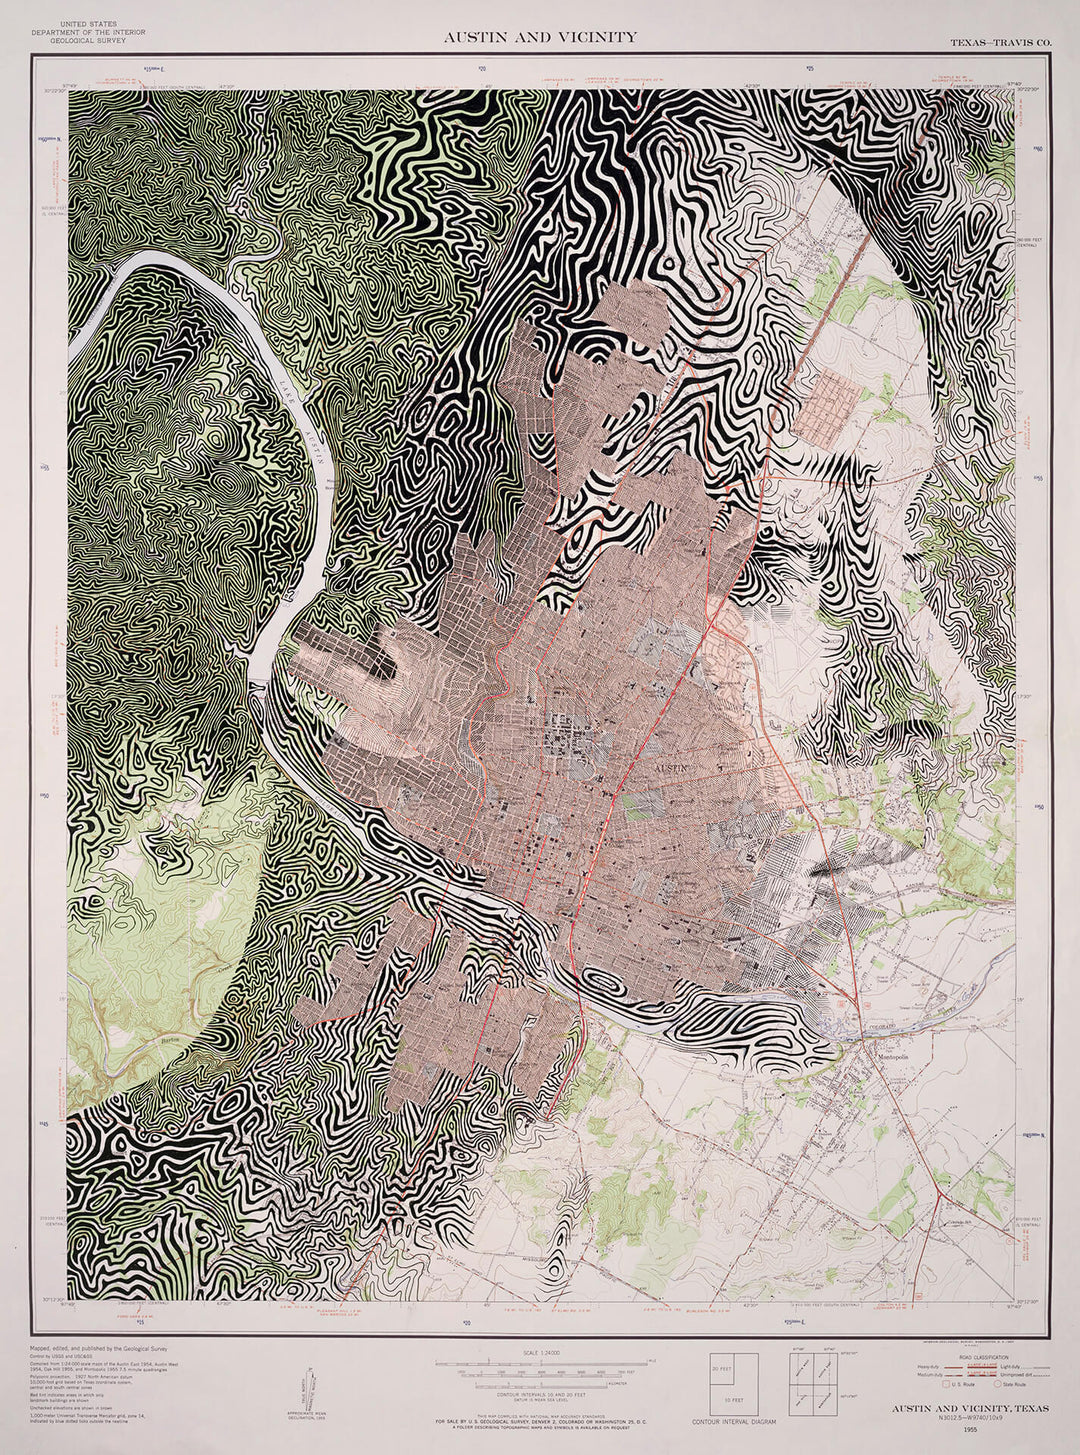 Printed street map of Ed Fairburn | "Austin and Vicinity" by Ed Fairburn.